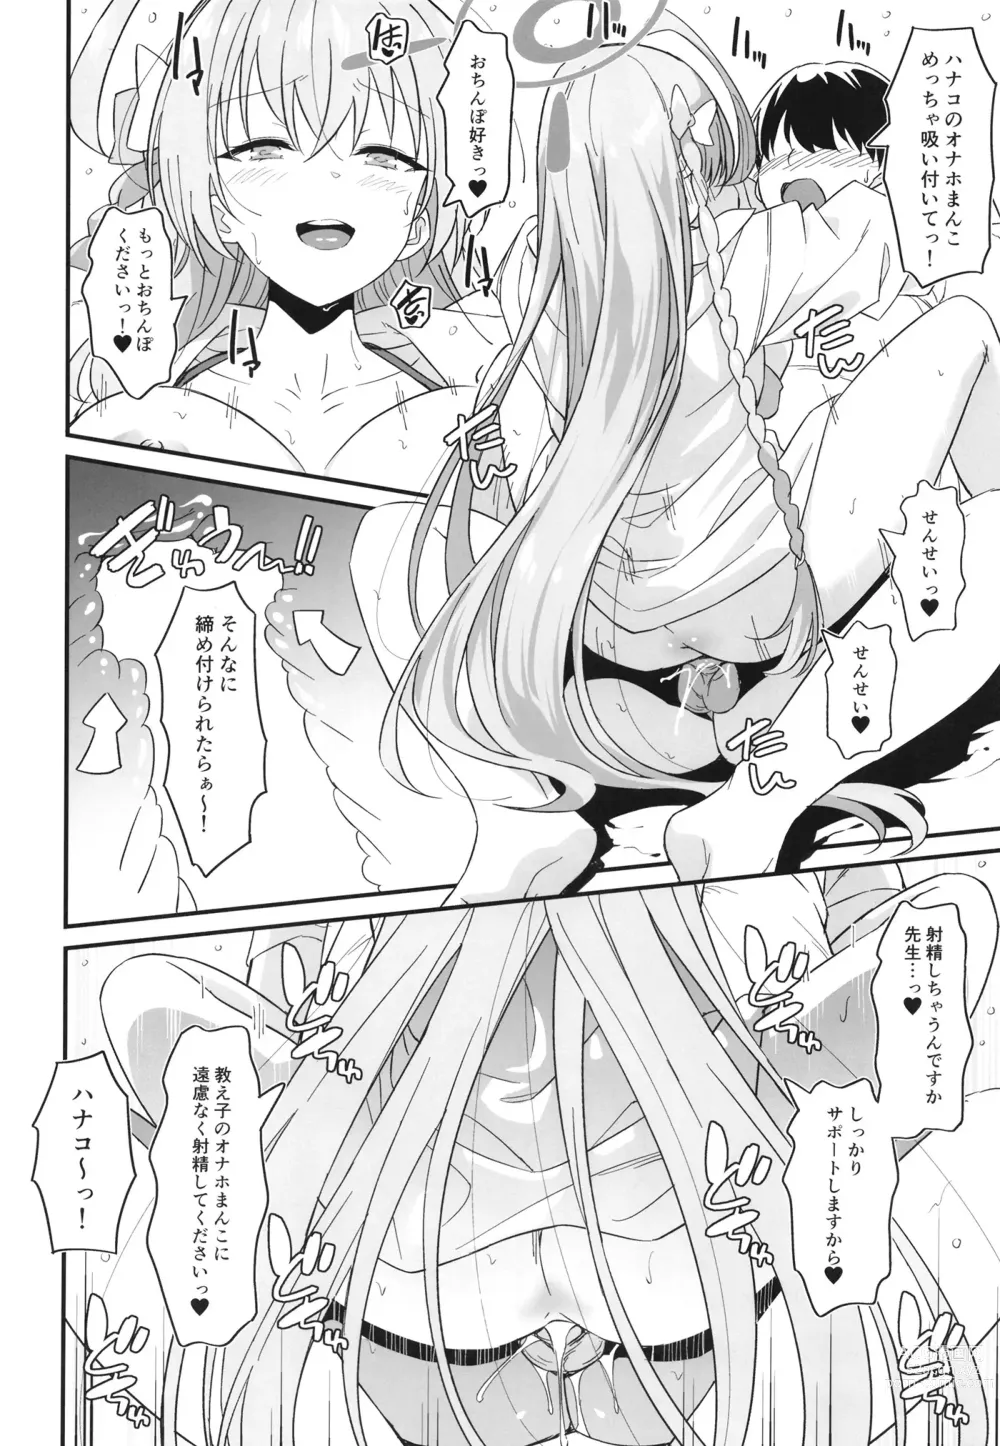 Page 19 of doujinshi Onanie Supporter Hanako